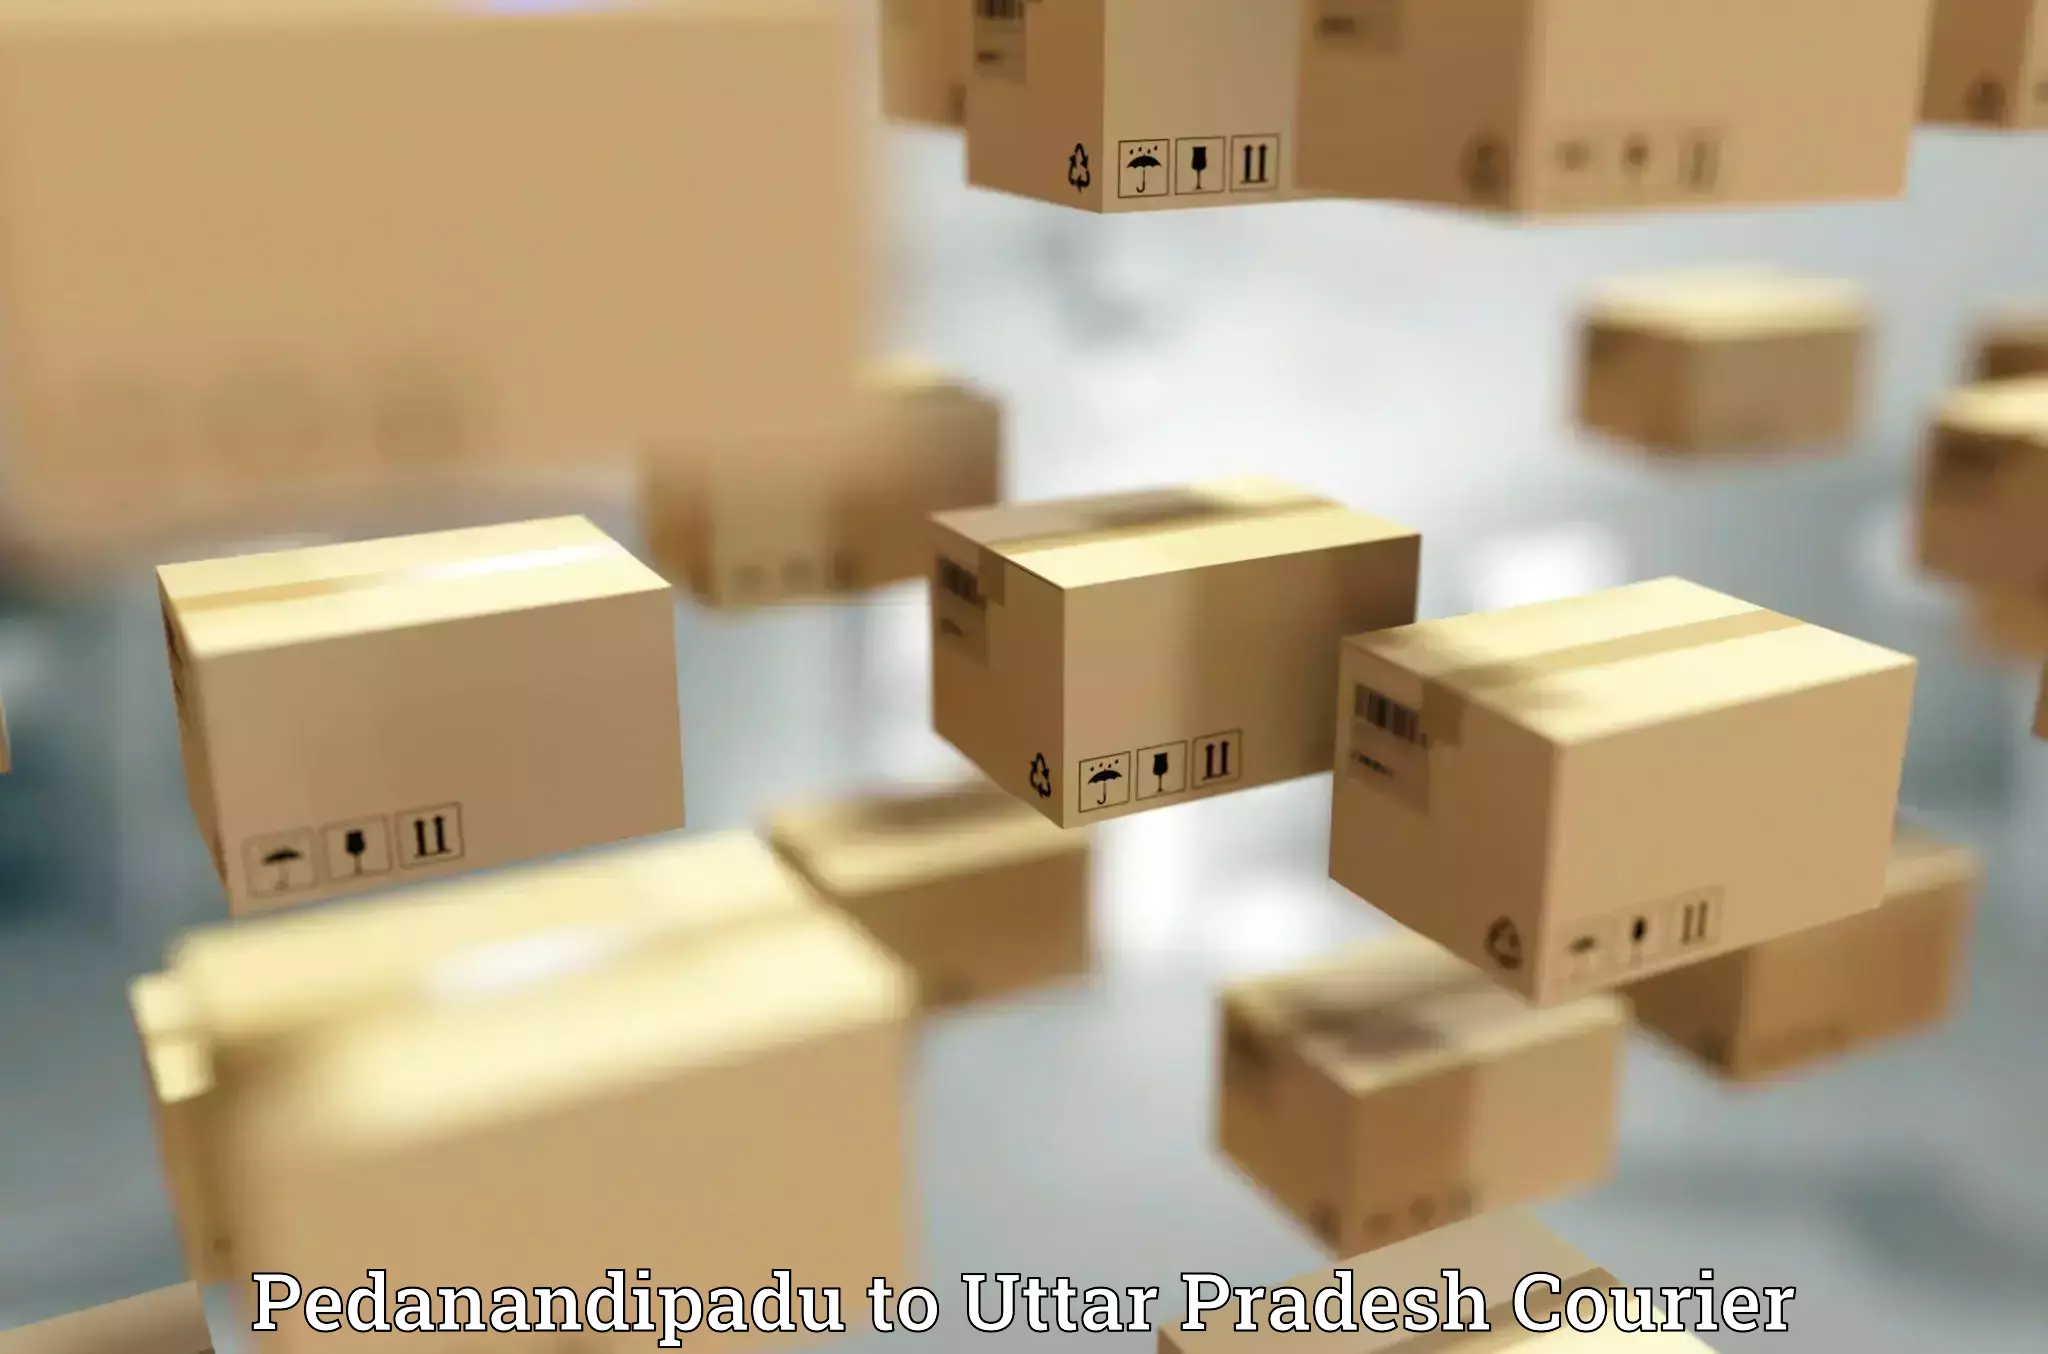 Sustainable delivery practices Pedanandipadu to Sikandra Rao